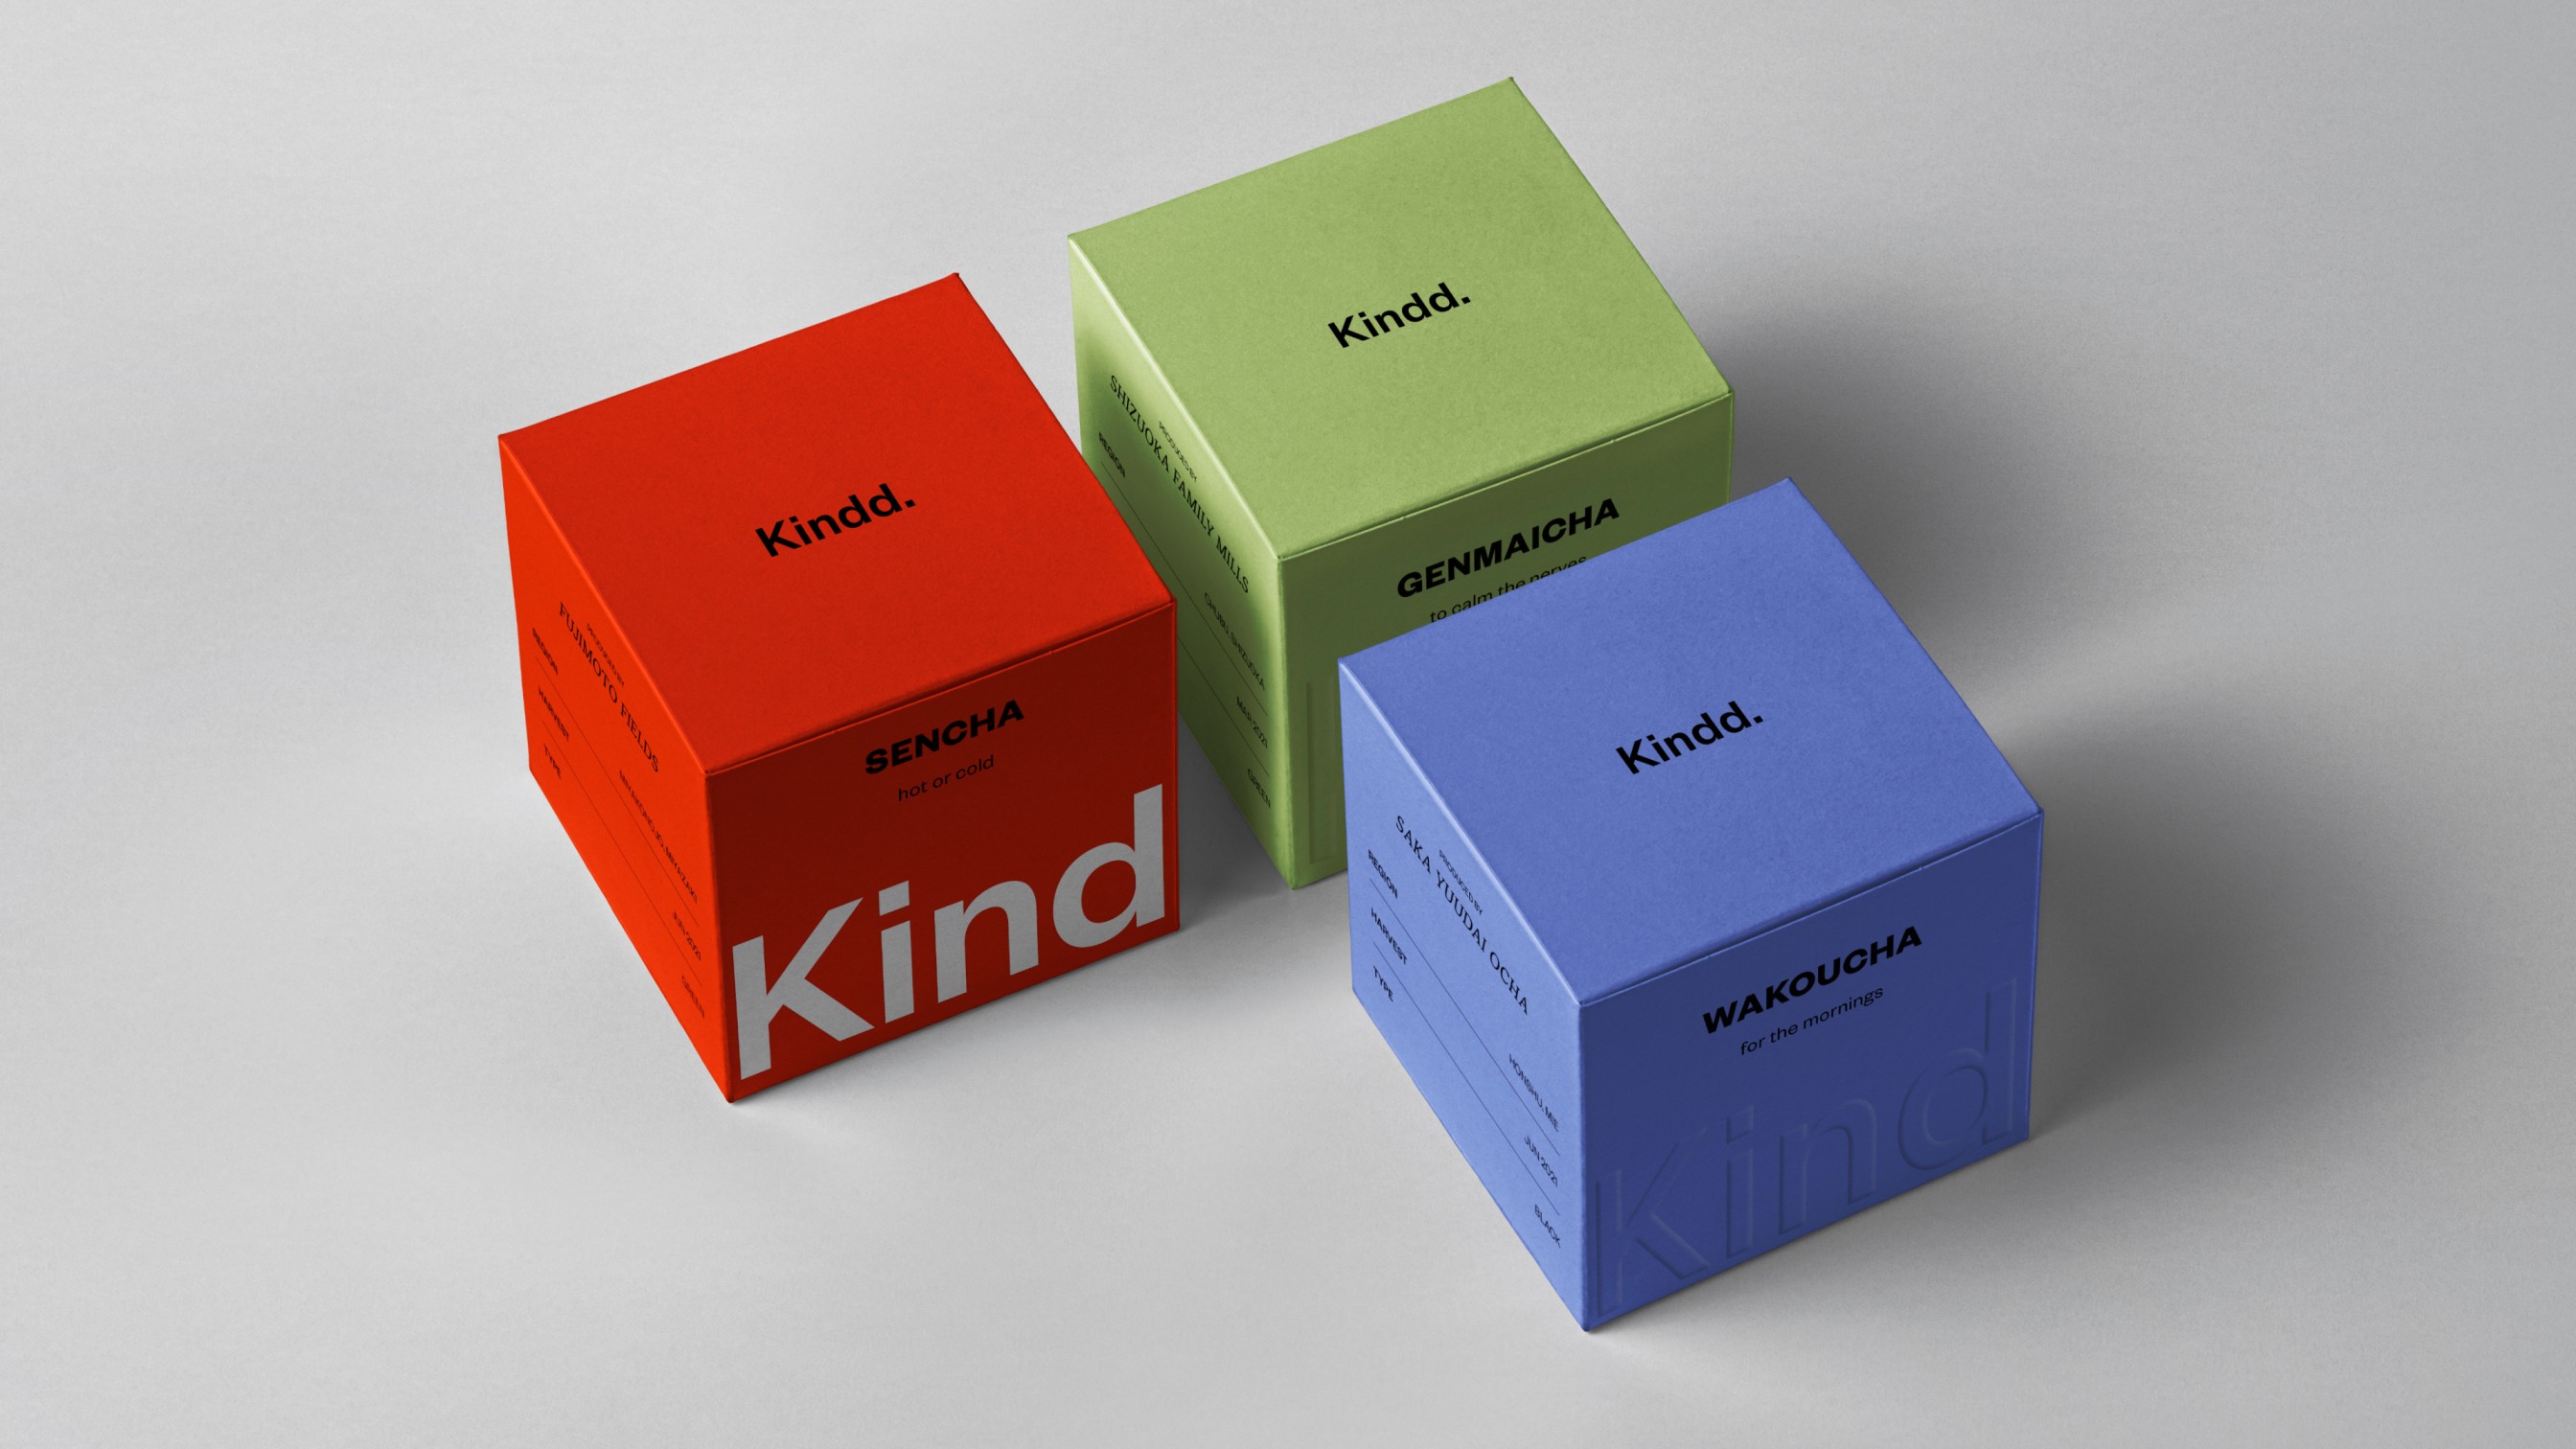 Tea brand minimalistic box package design